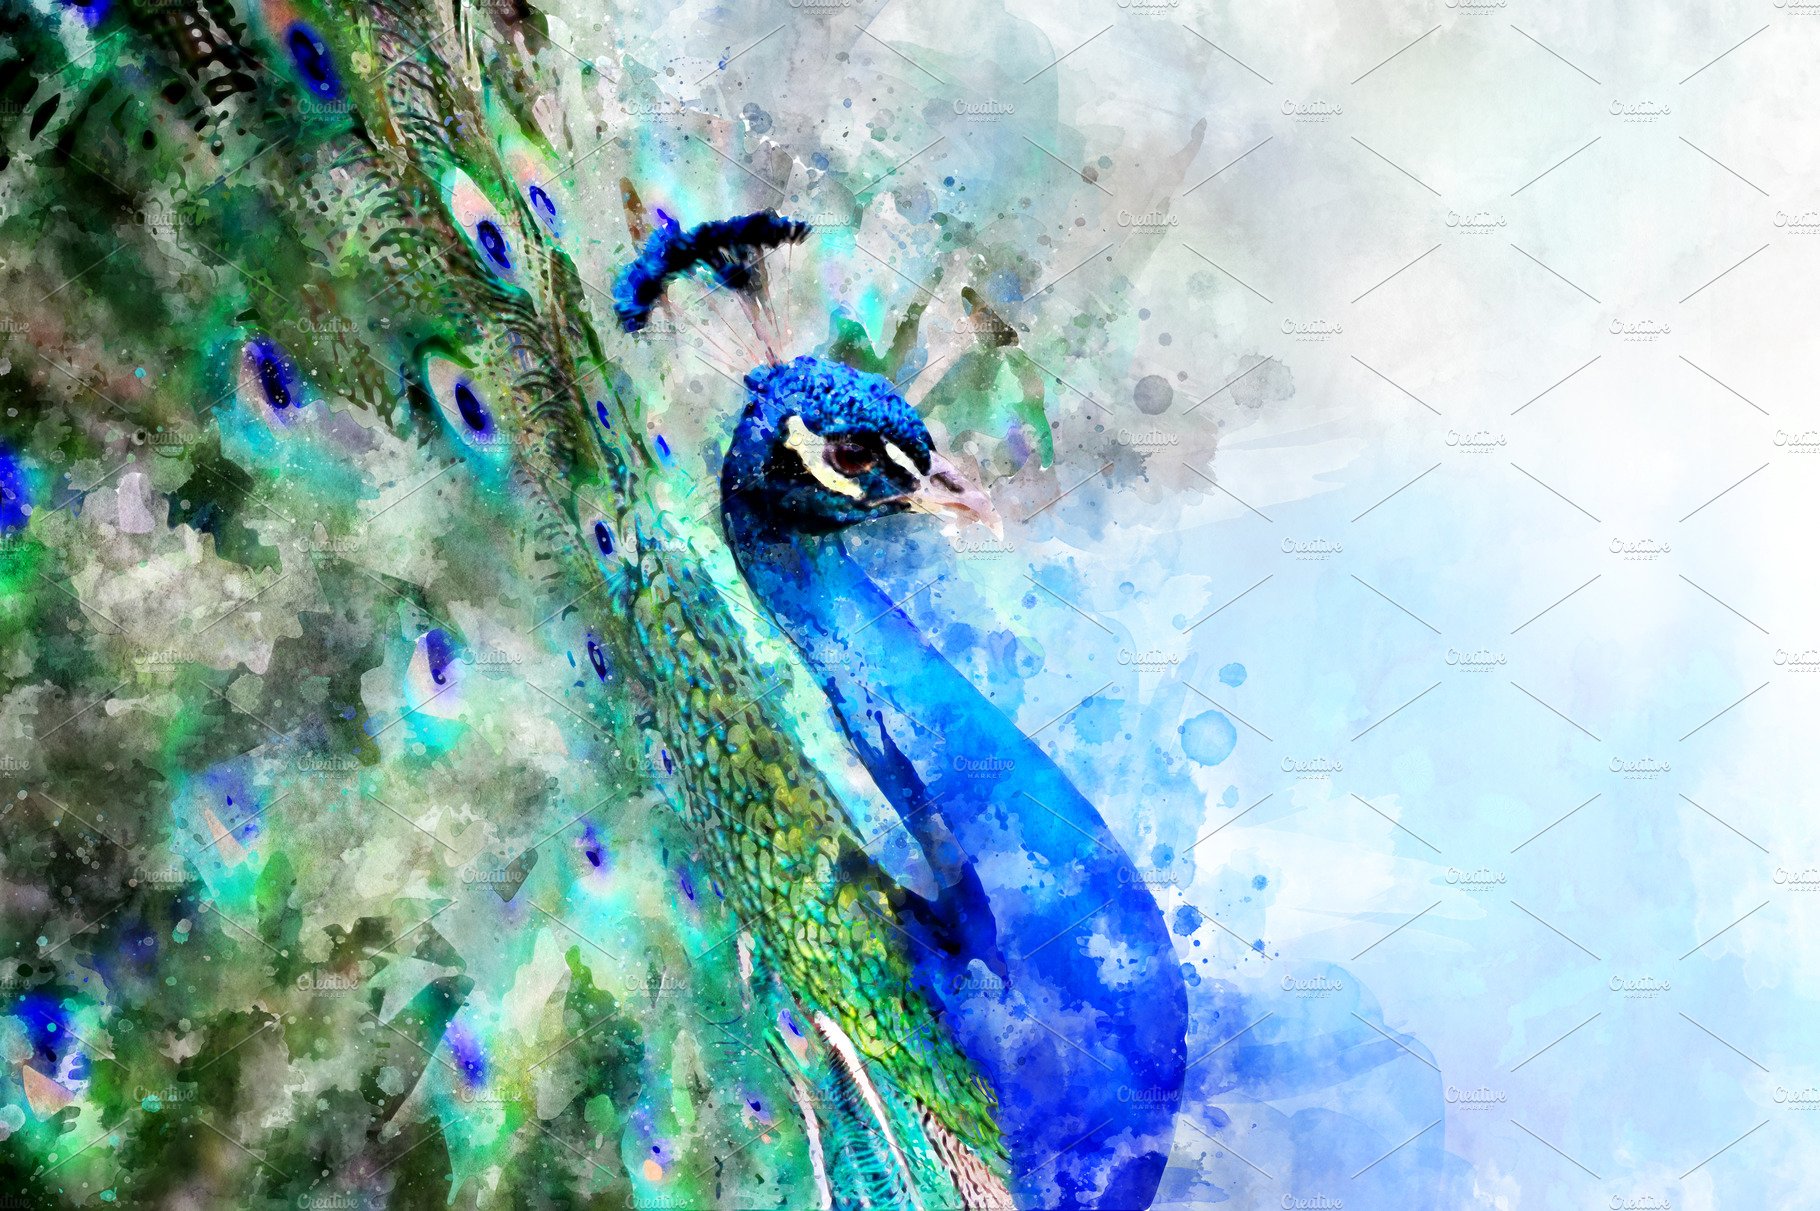 Peacock - watercolor illustration po cover image.